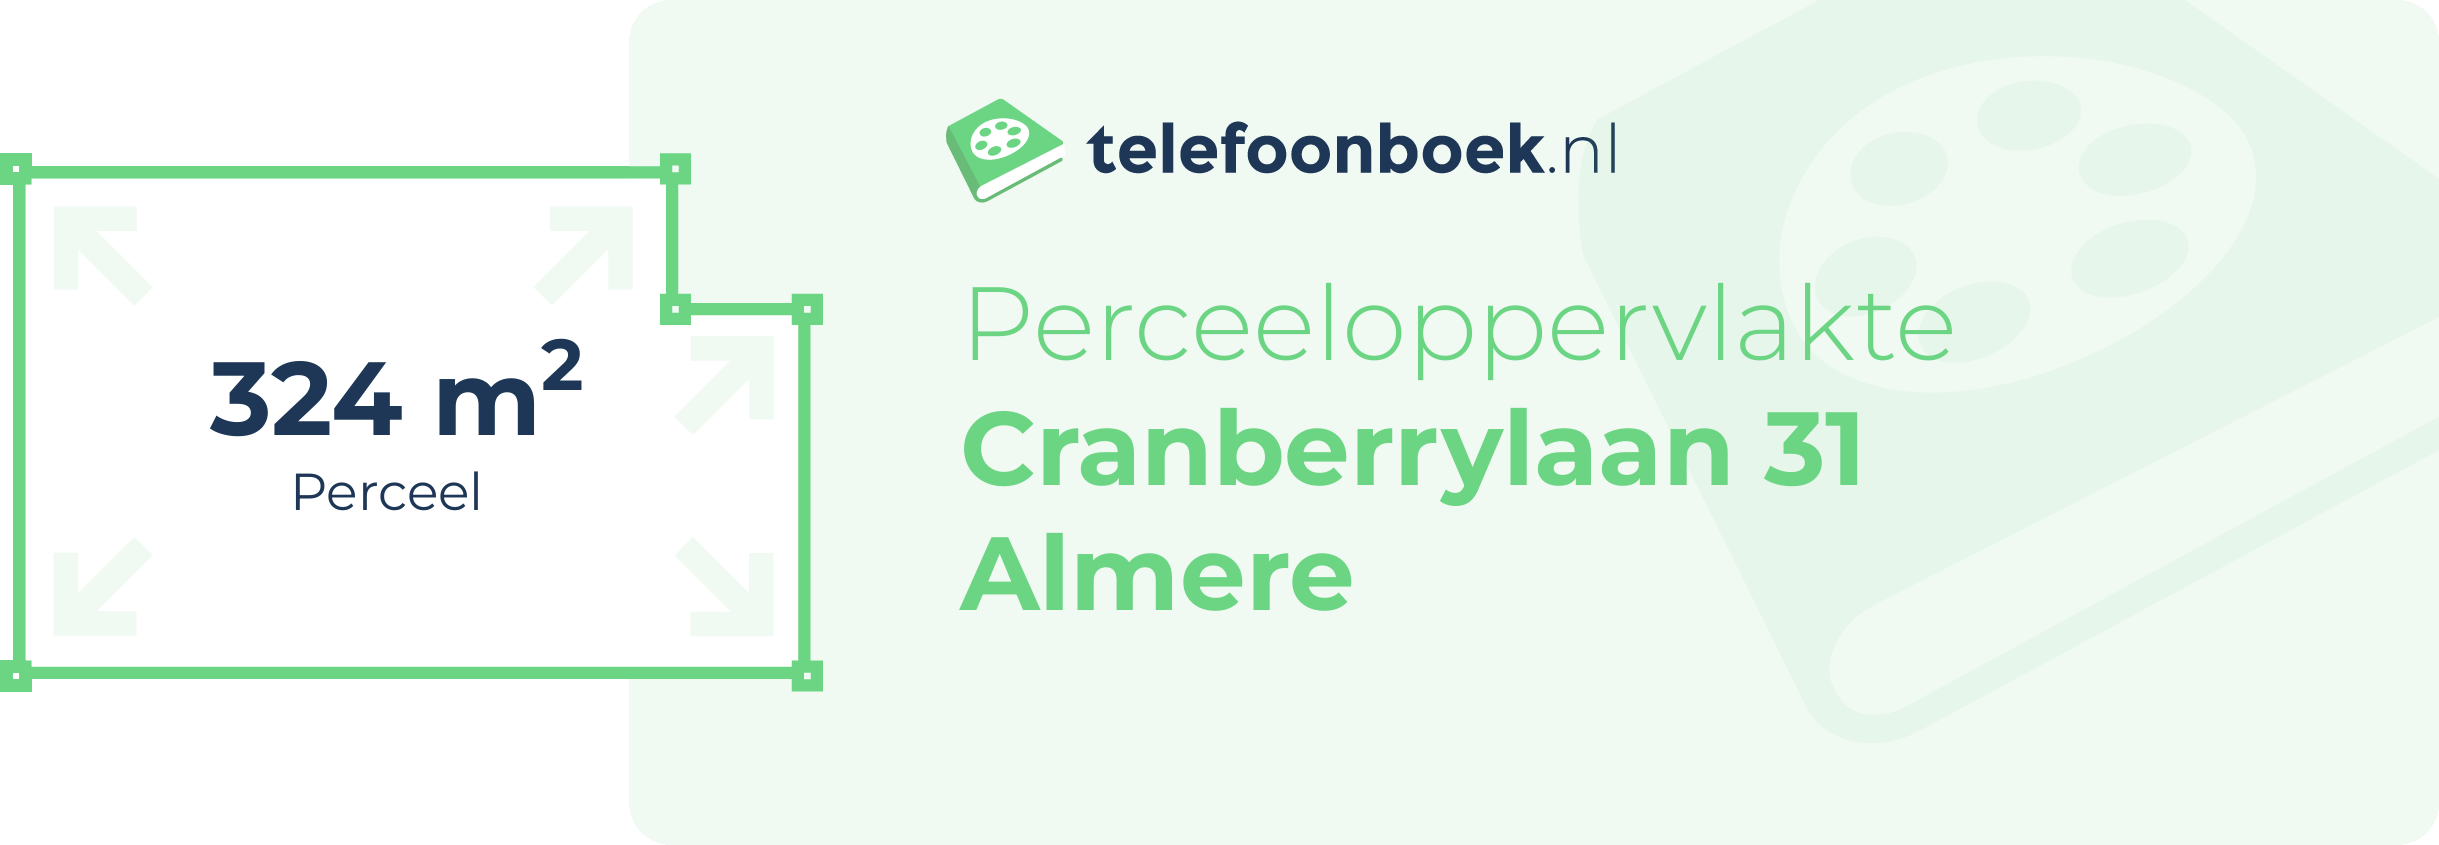 Perceeloppervlakte Cranberrylaan 31 Almere